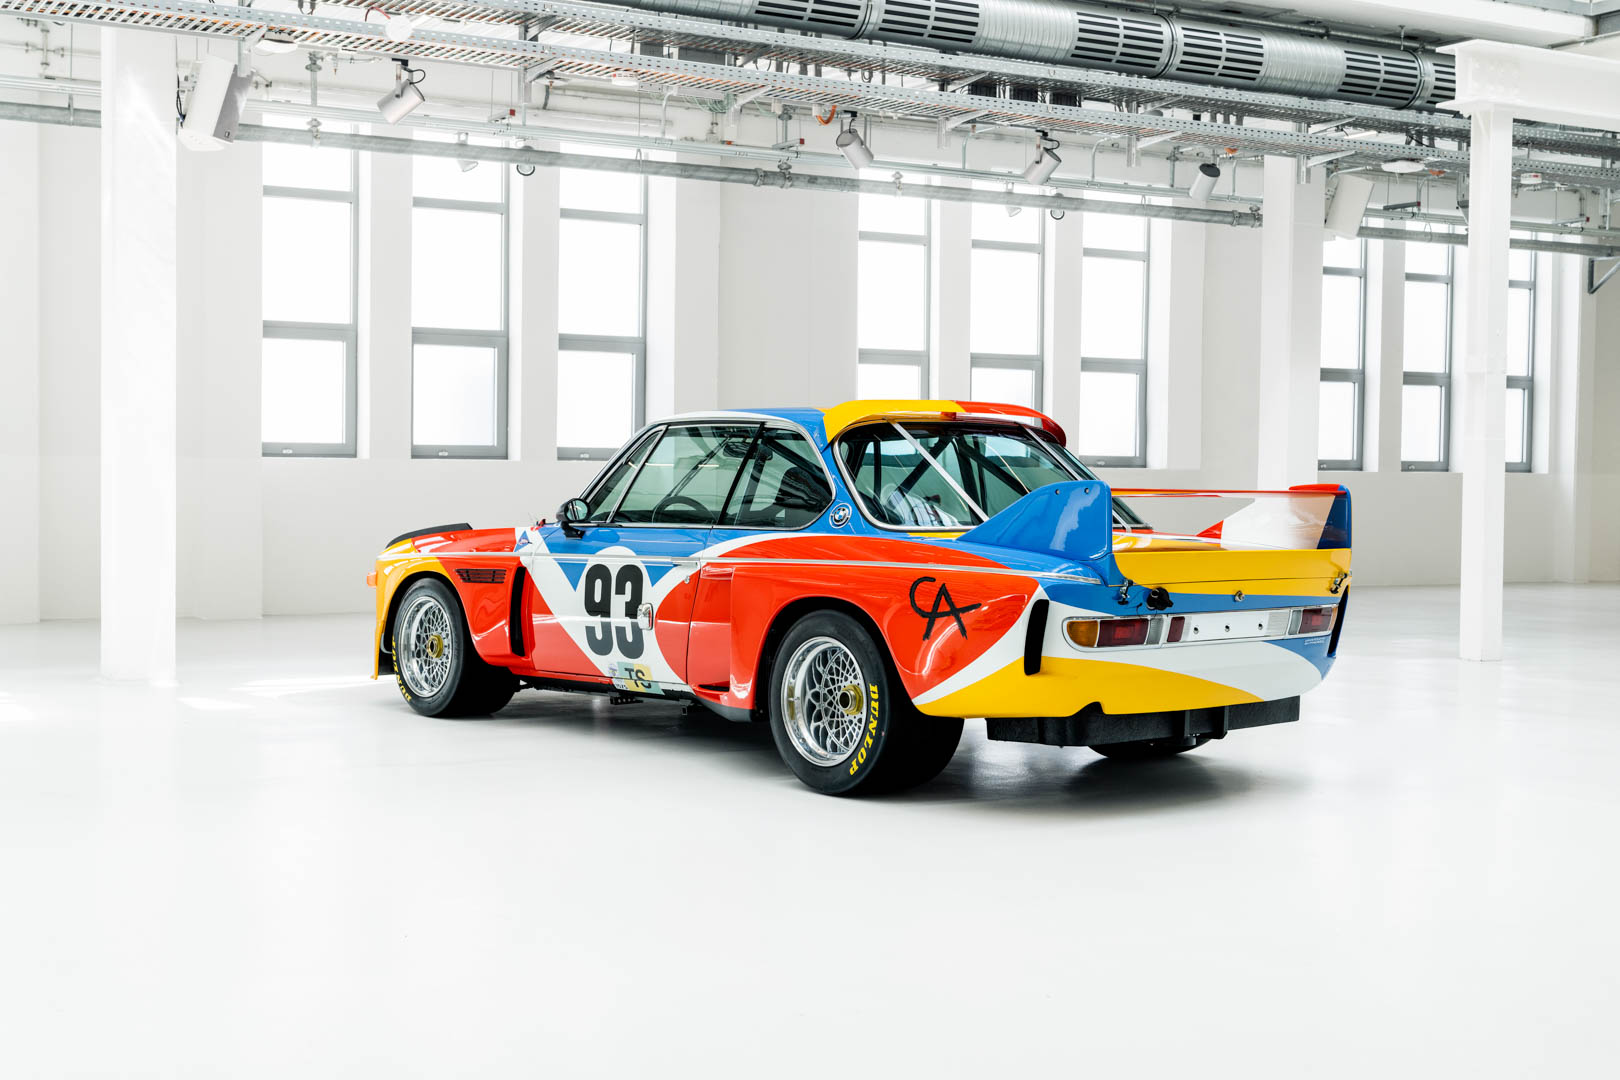 Alexander Calder's BMW 3.0 CSL Art Car Artist's Proof will Debut in Berlin